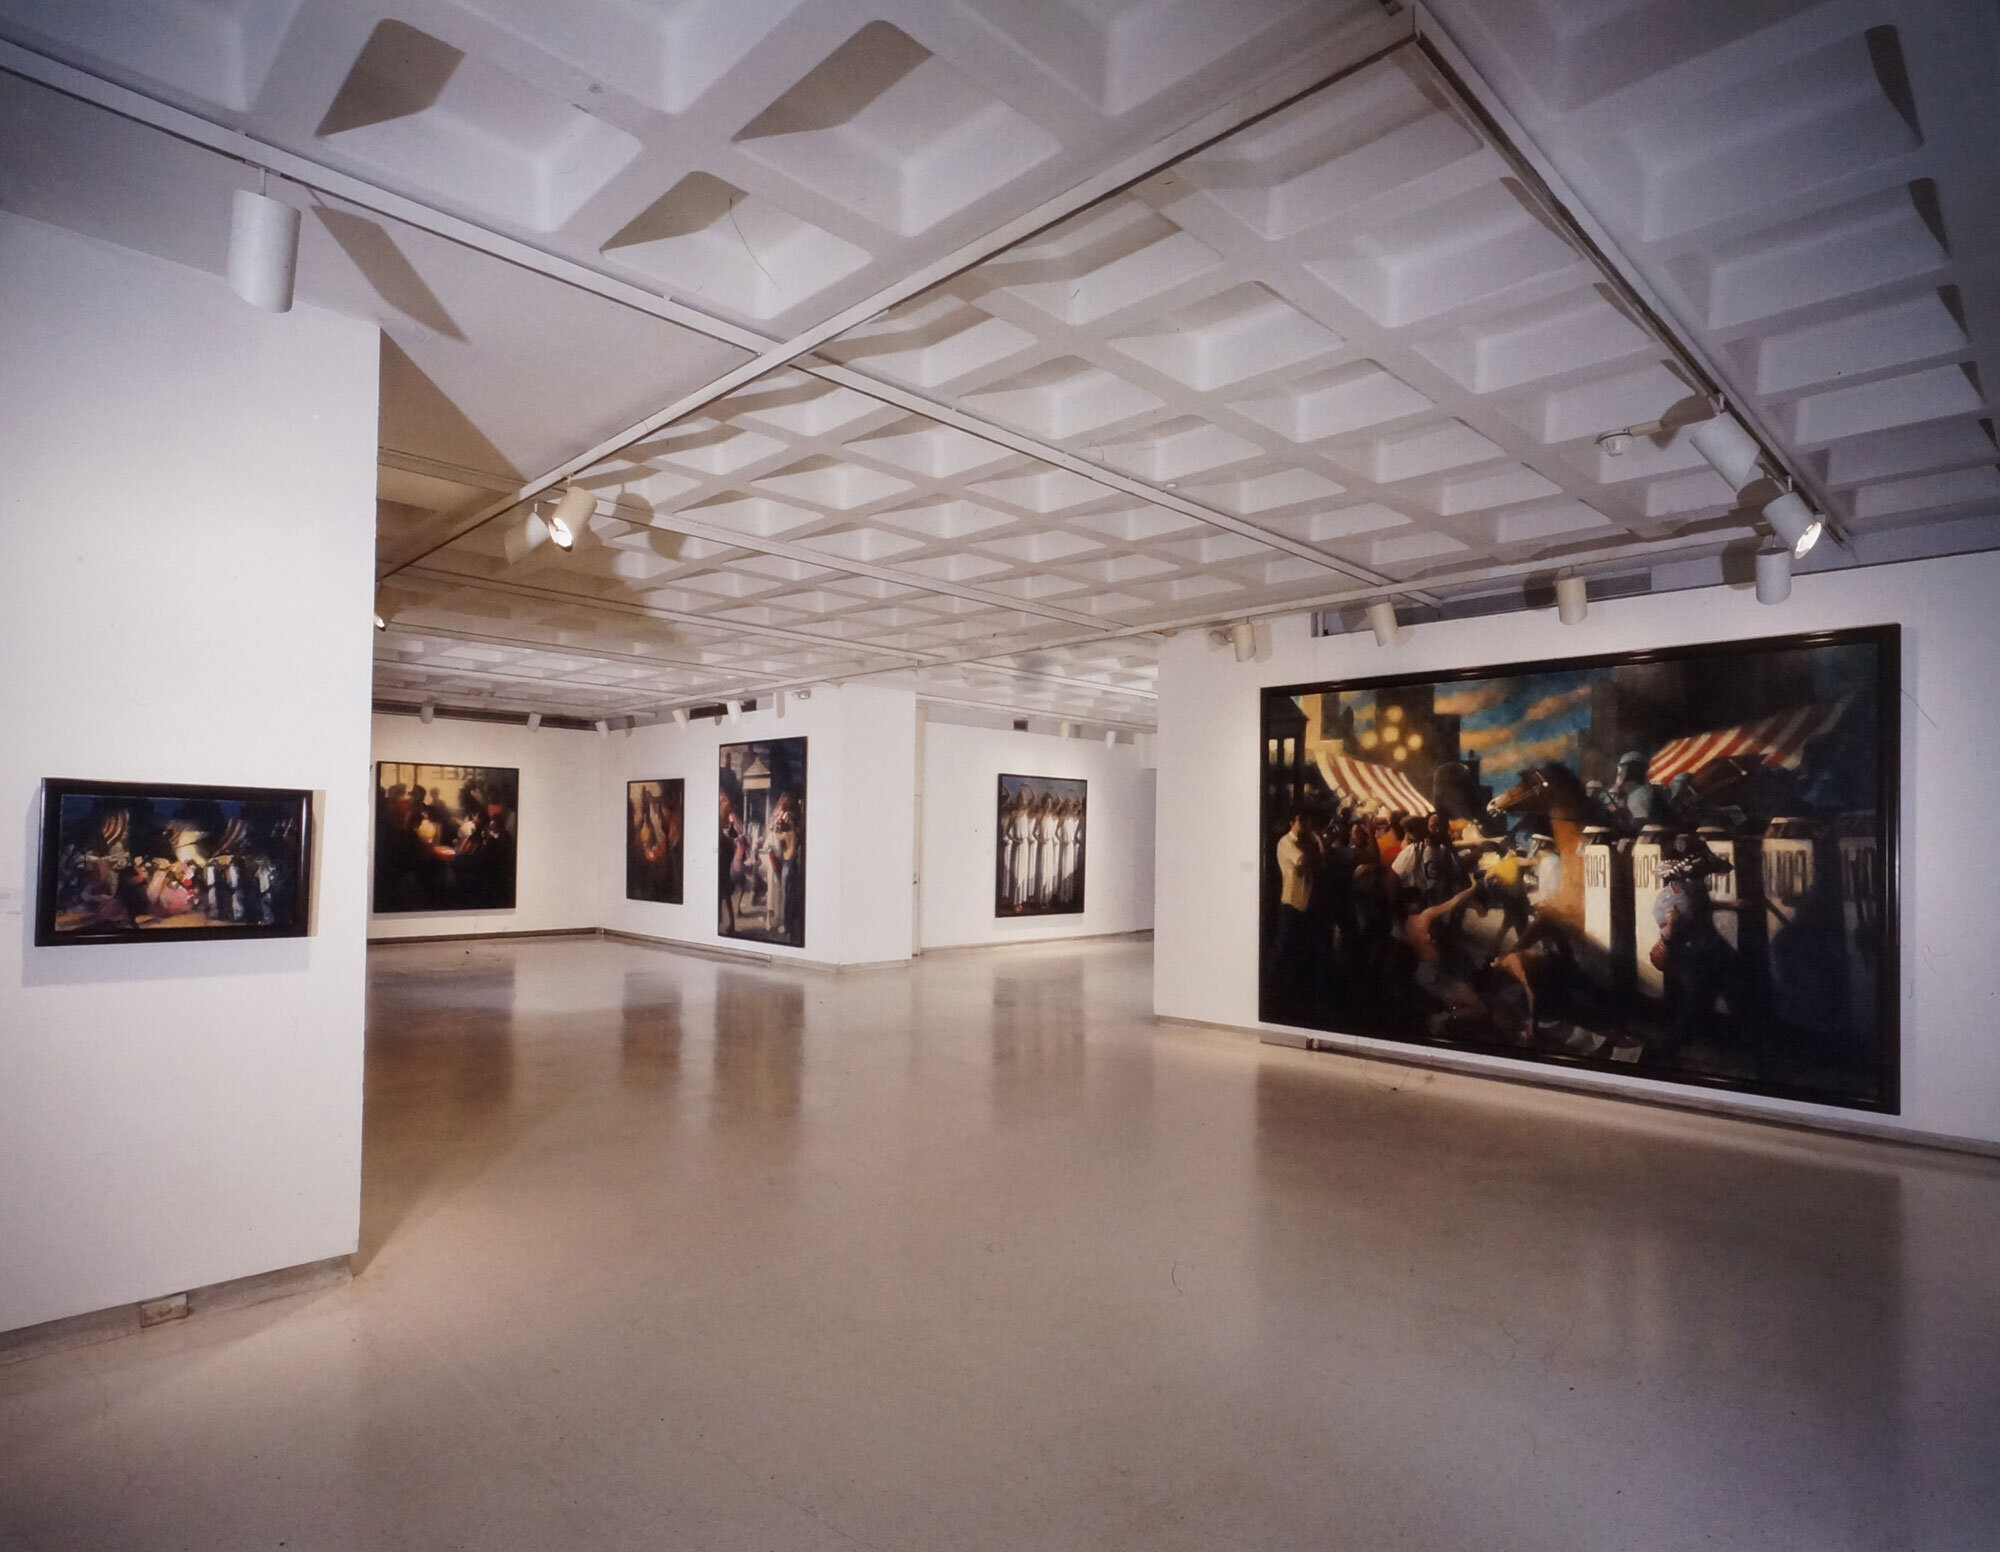  Exhibition at Marlborough Gallery, 1990 